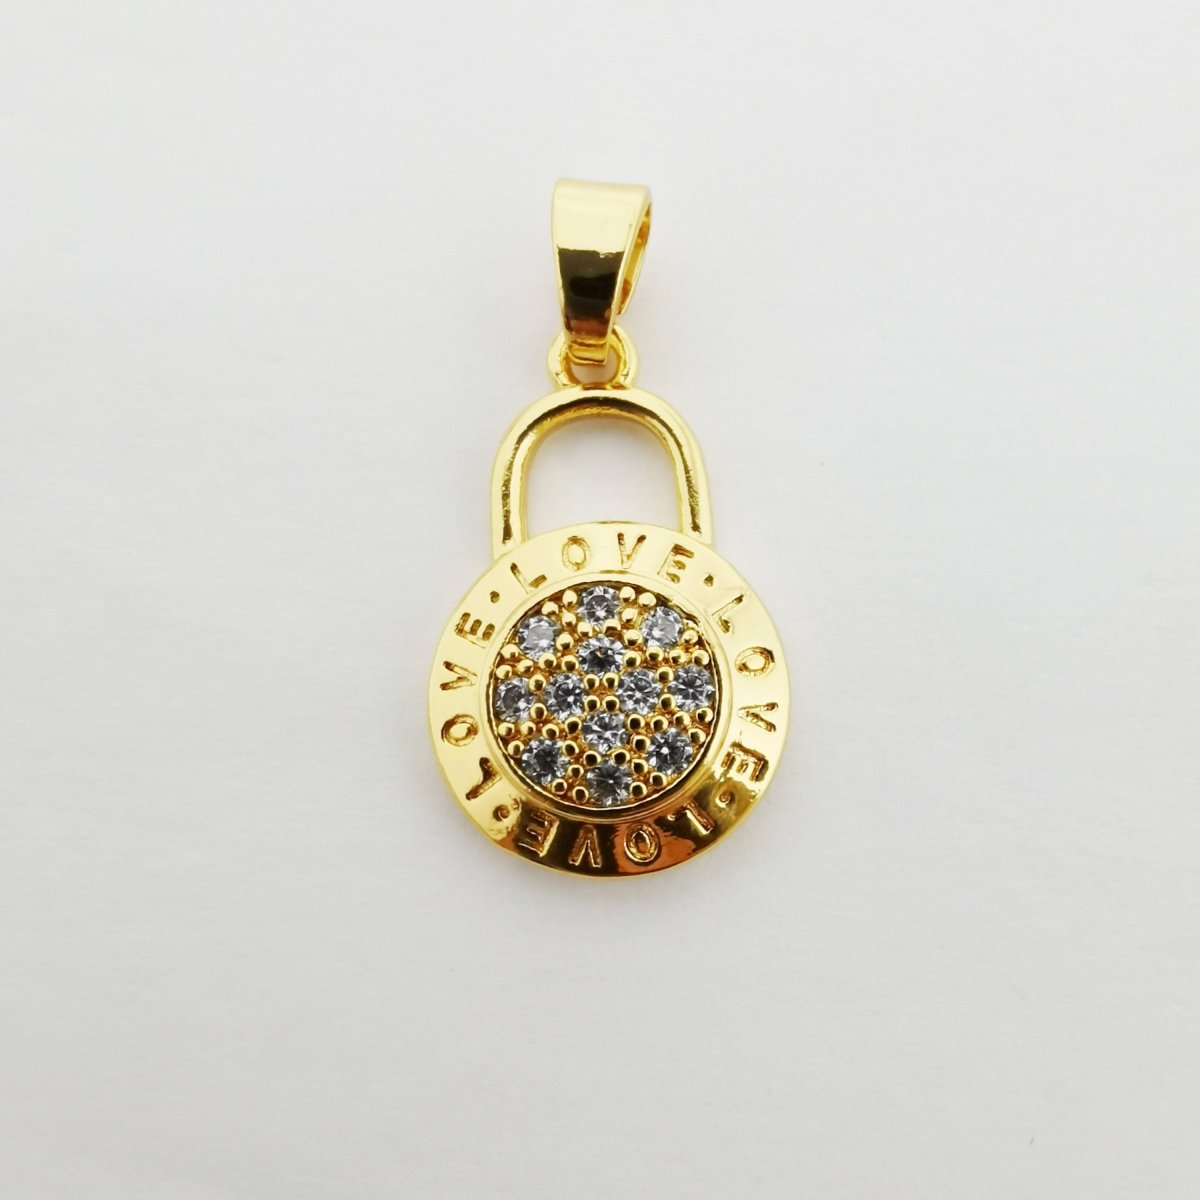 24k Gold Filled Love Lock charm, Cubic Zirconia Jewels, Micro Diamond Paved, PadLock and Key Charm, Love Jewelry Making Supply I-773 - DLUXCA